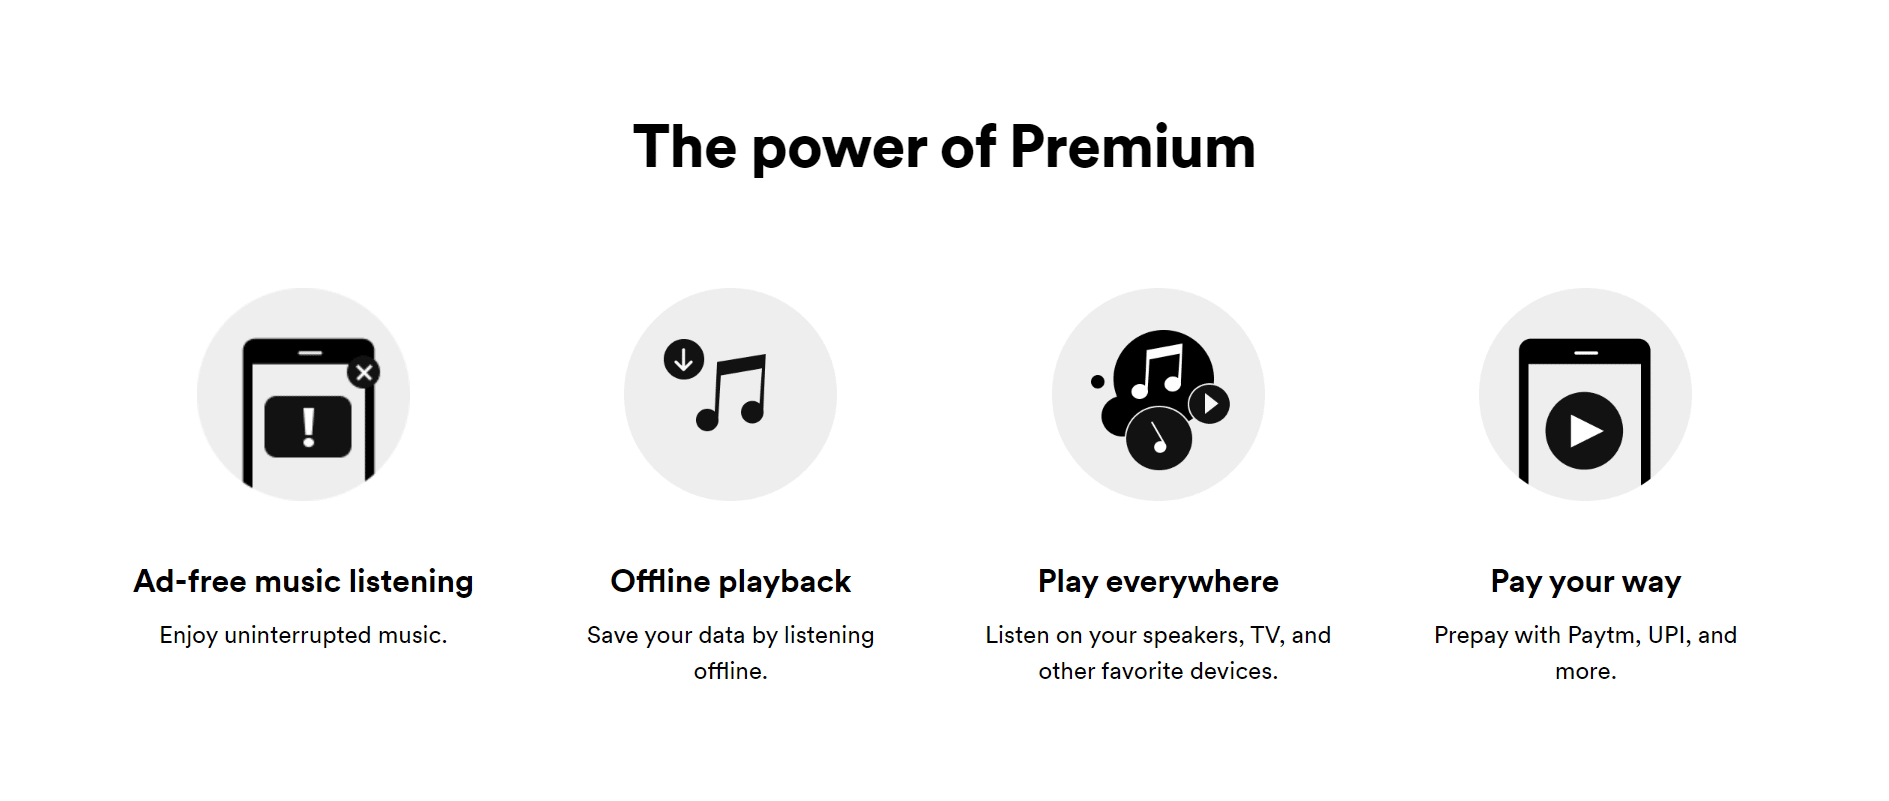 premium vs gratis su spotify